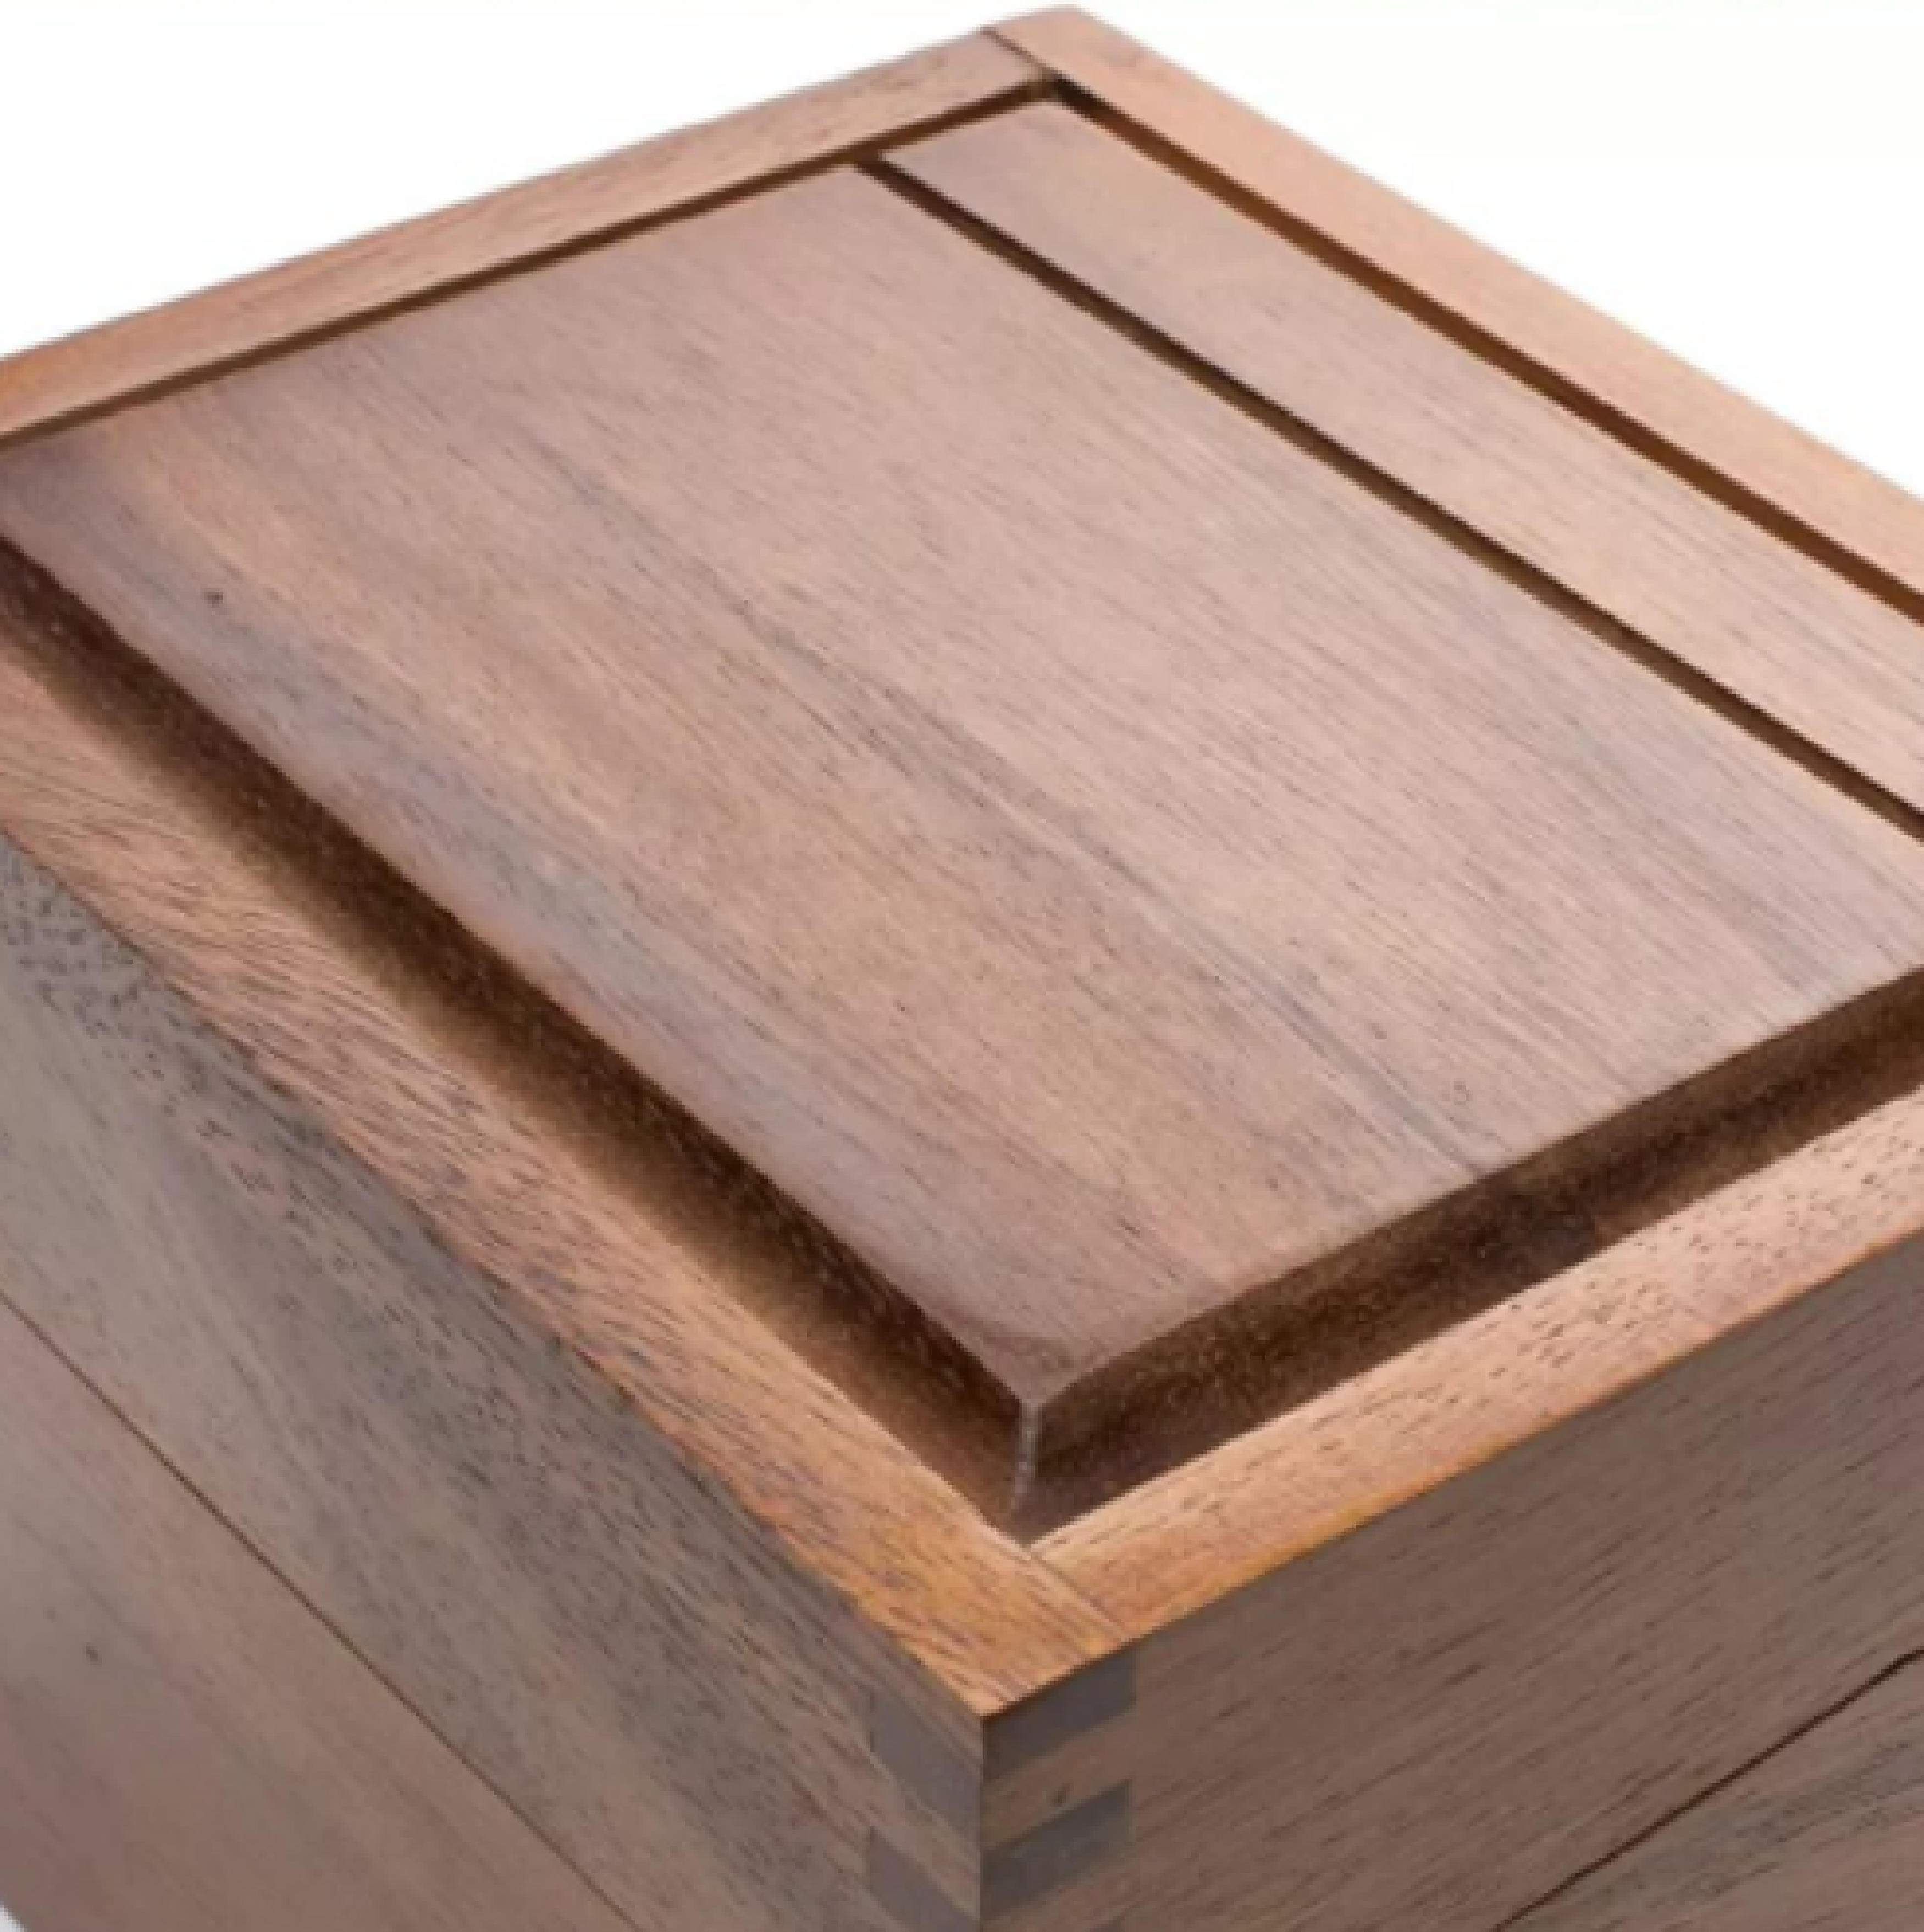 Acacia wood recipe box wooden formula box